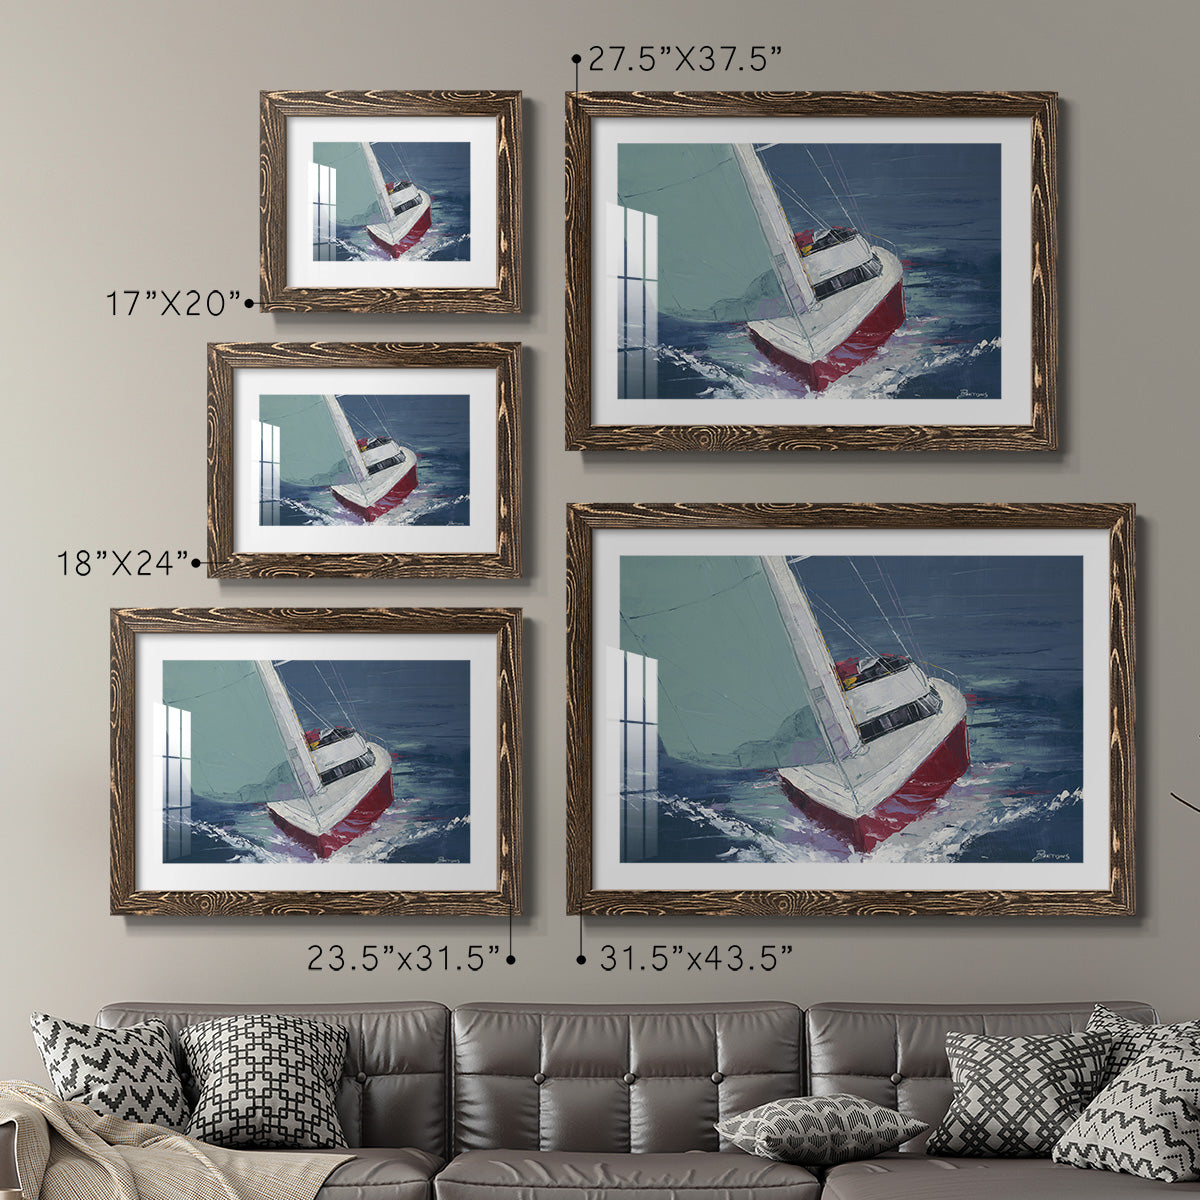 Day Sailing-Premium Framed Print - Ready to Hang